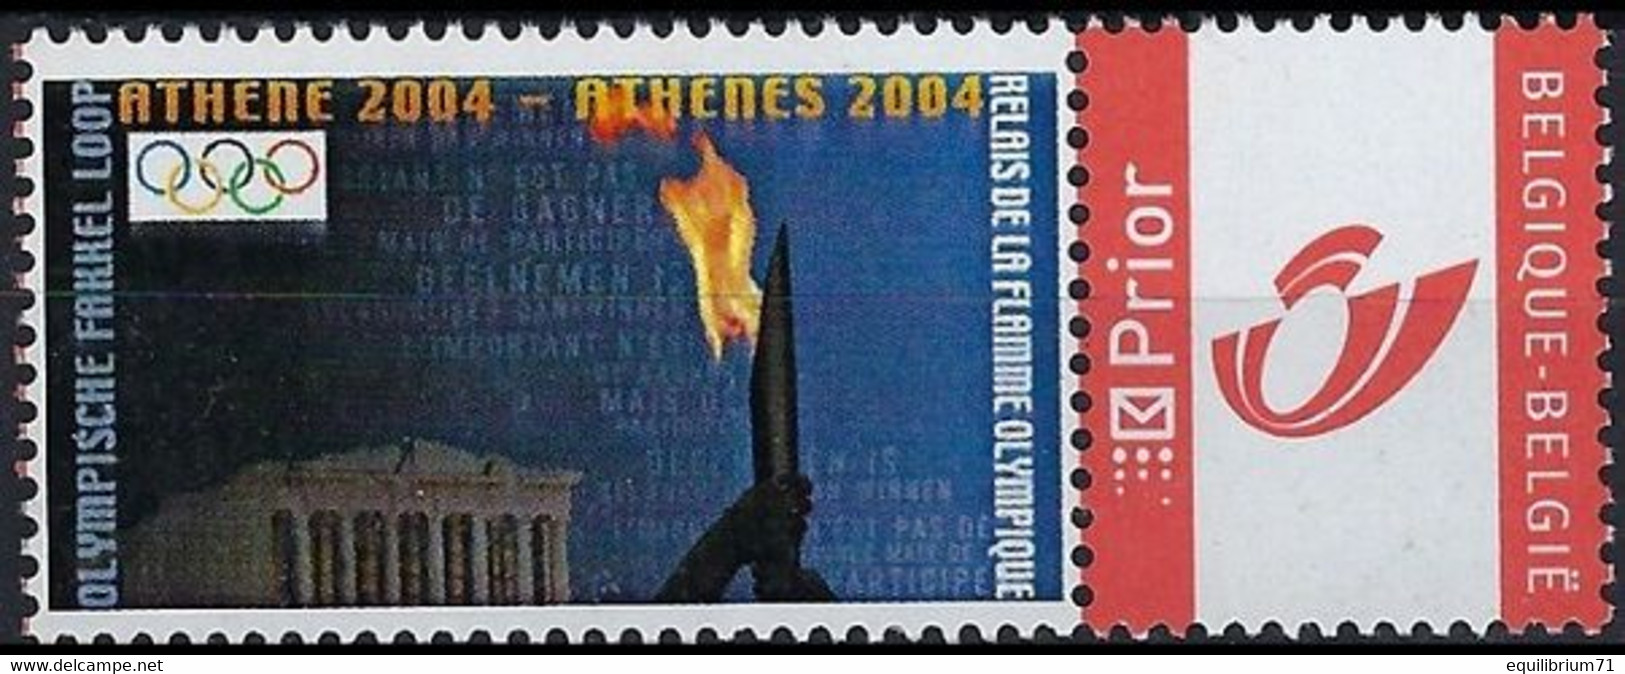 DUOSTAMP** / MYSTAMP** - Relais De La Flamme Des Jeux Olympiques D'Athènes / Olympische Spelen Fakkelloop Athene - 2004 - Sommer 2004: Athen - Paralympics